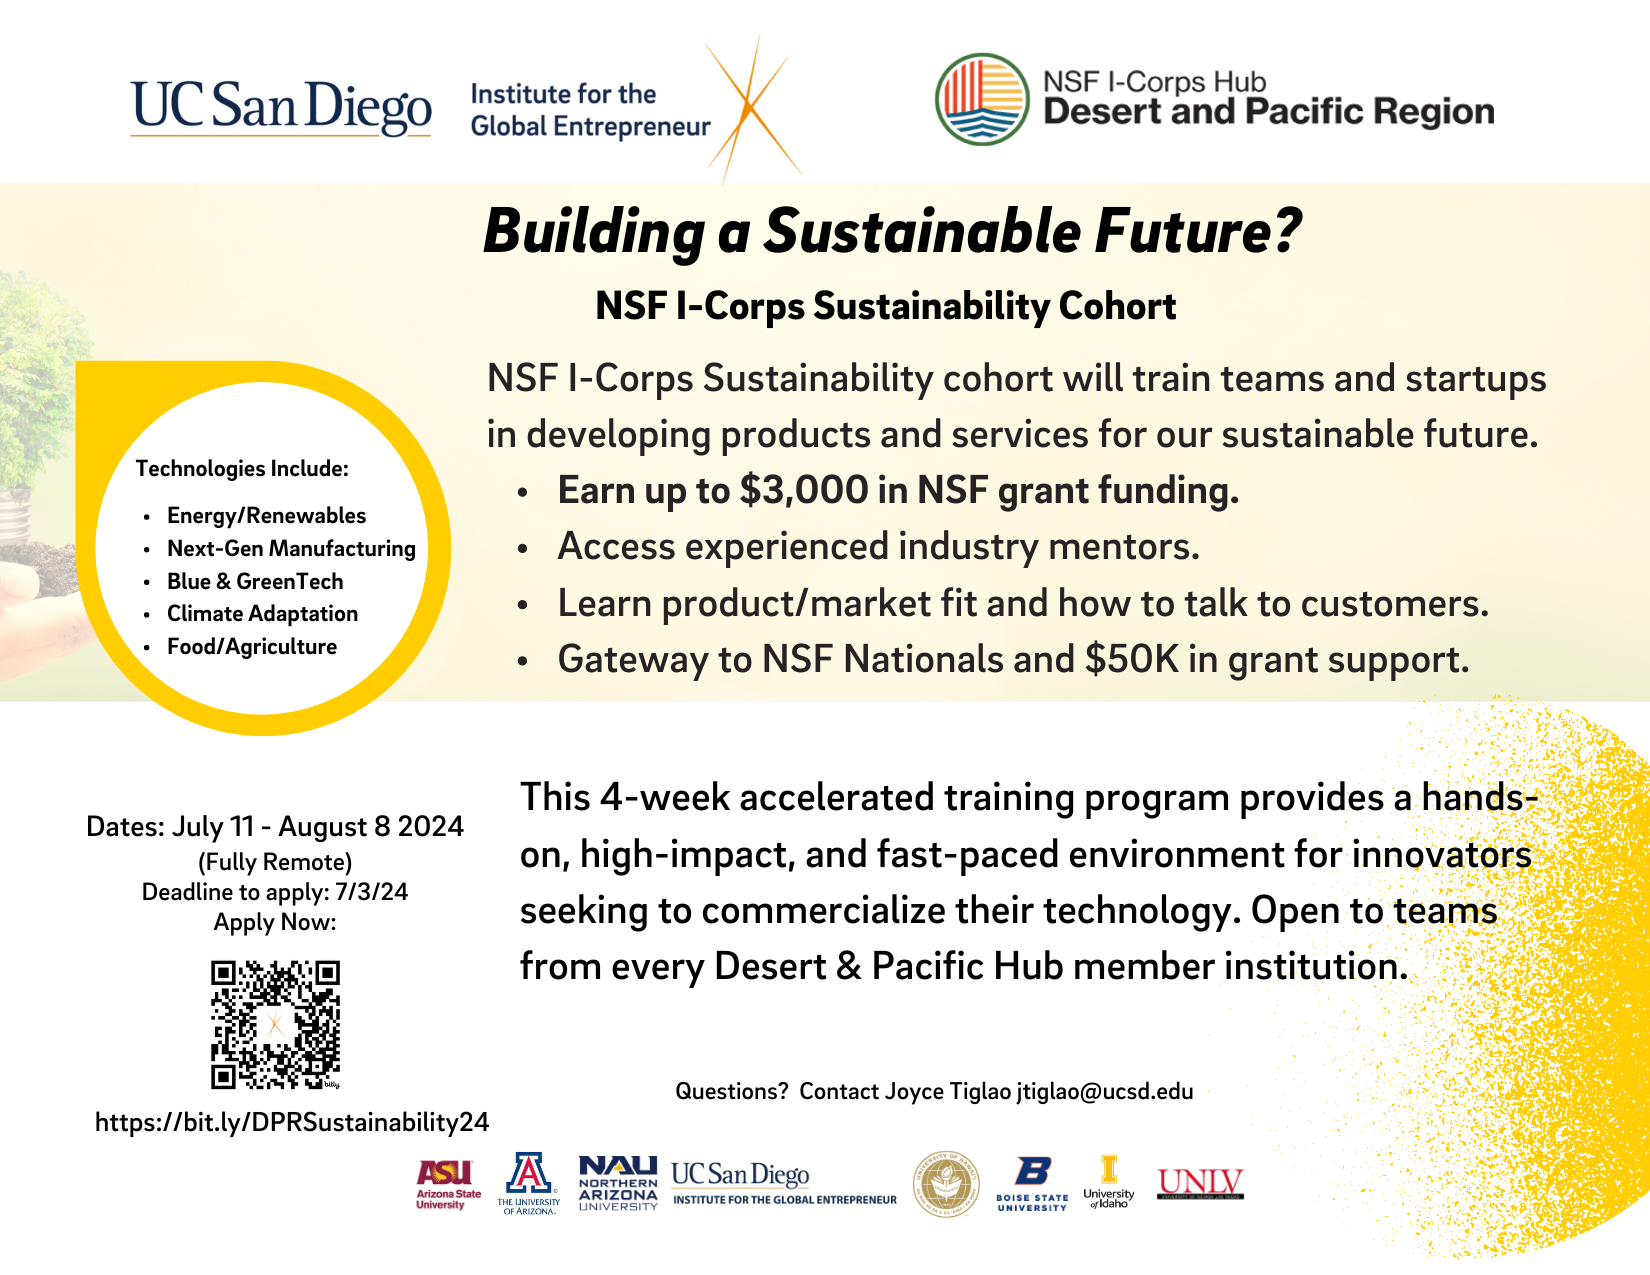 NSF I-Corps Sustainability Deadline August 8, 2024